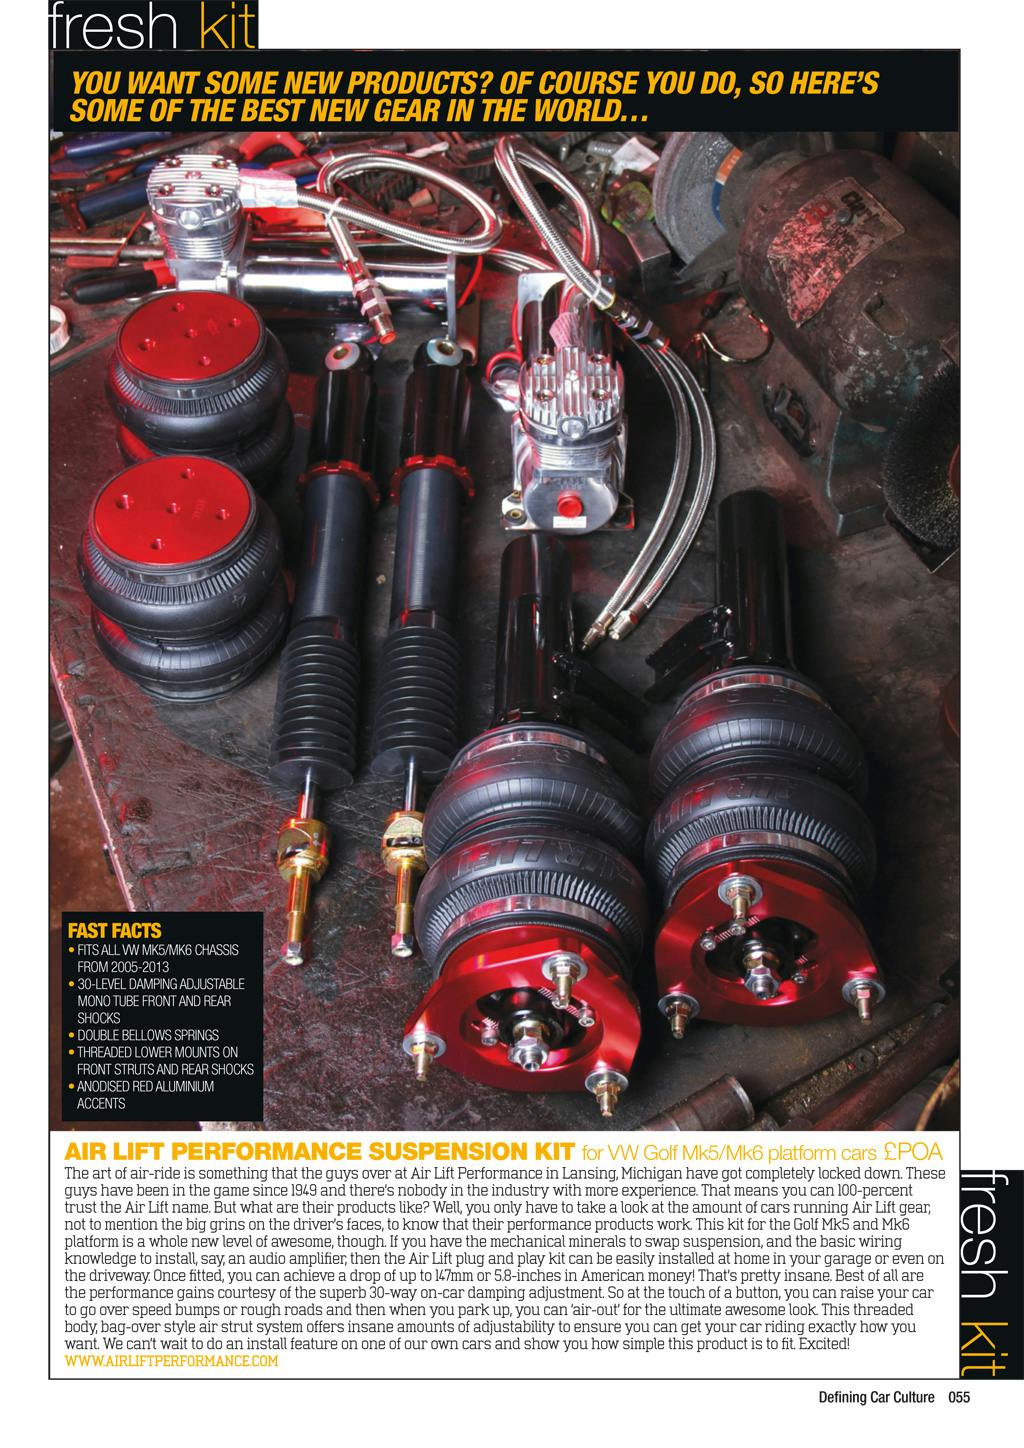 VW Mk5/Mk6 Threaded Body Performance Kit in Fast Car magazine